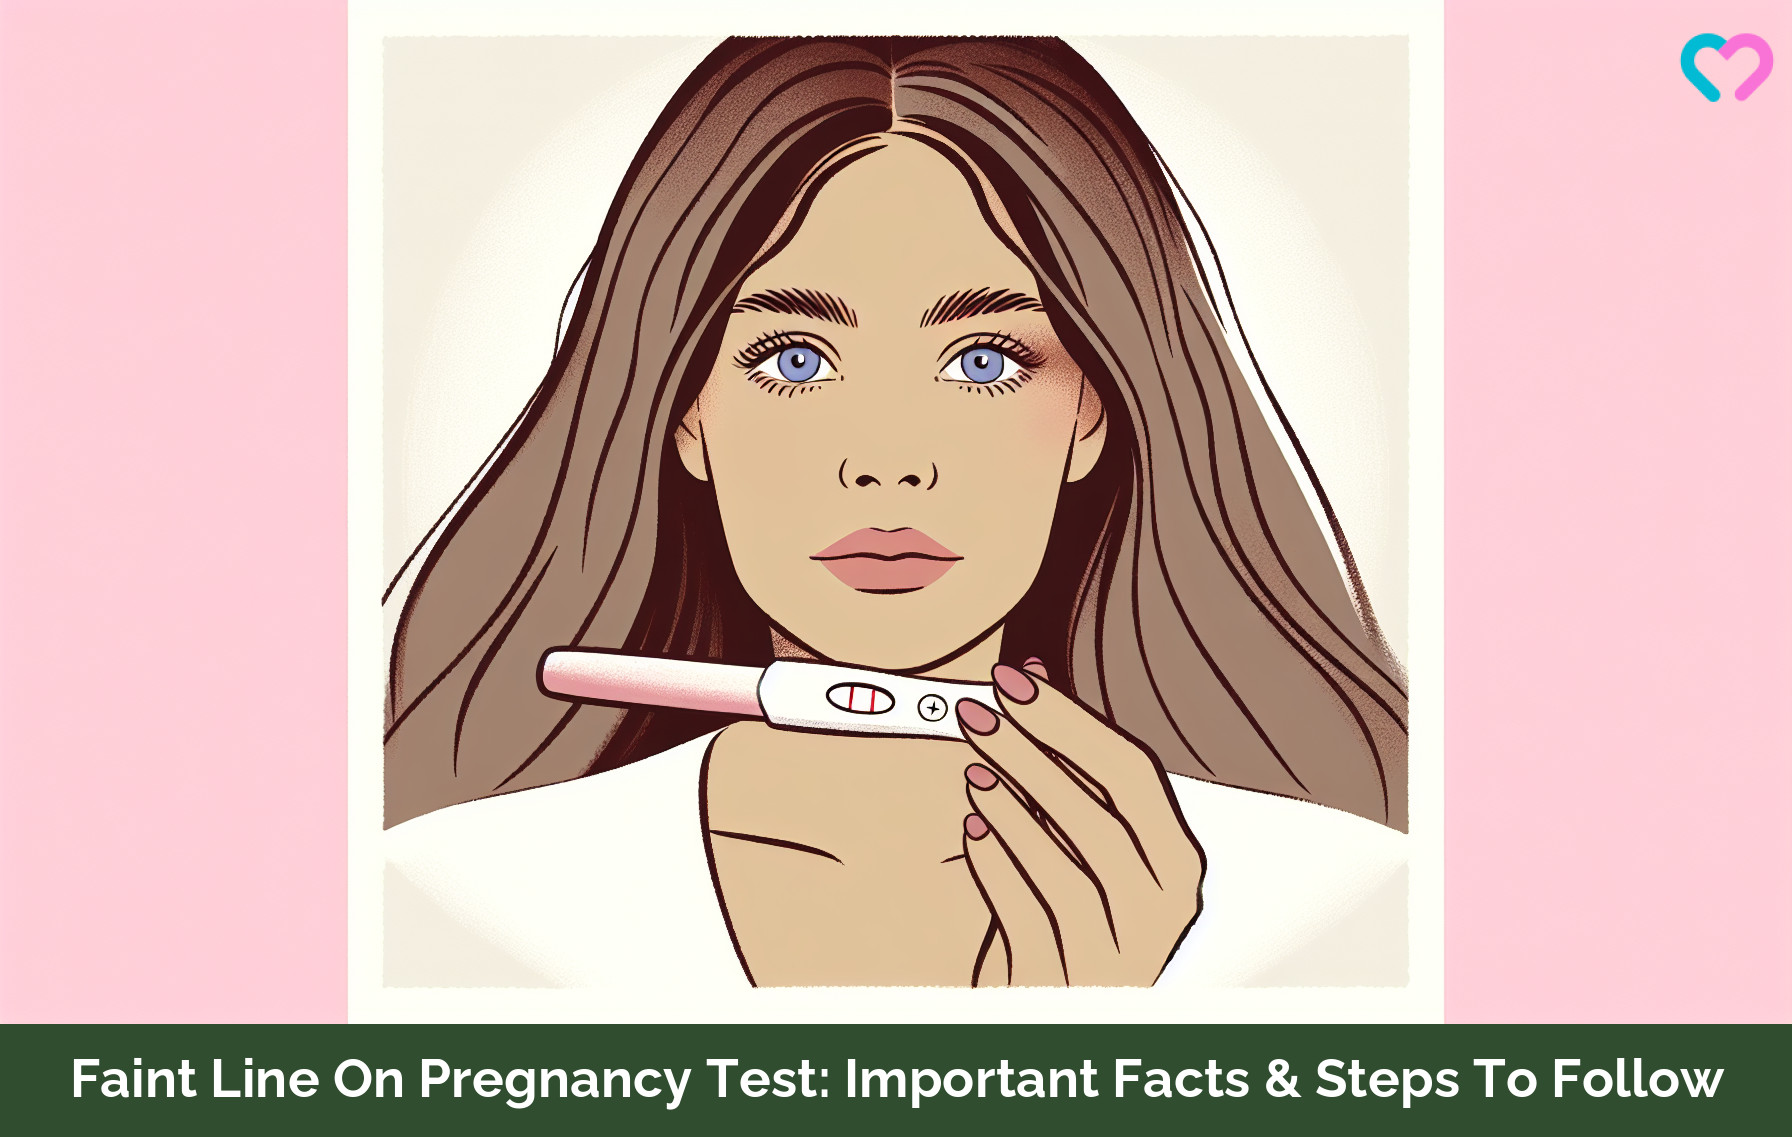 Faint Line On Pregnancy Test_illustration